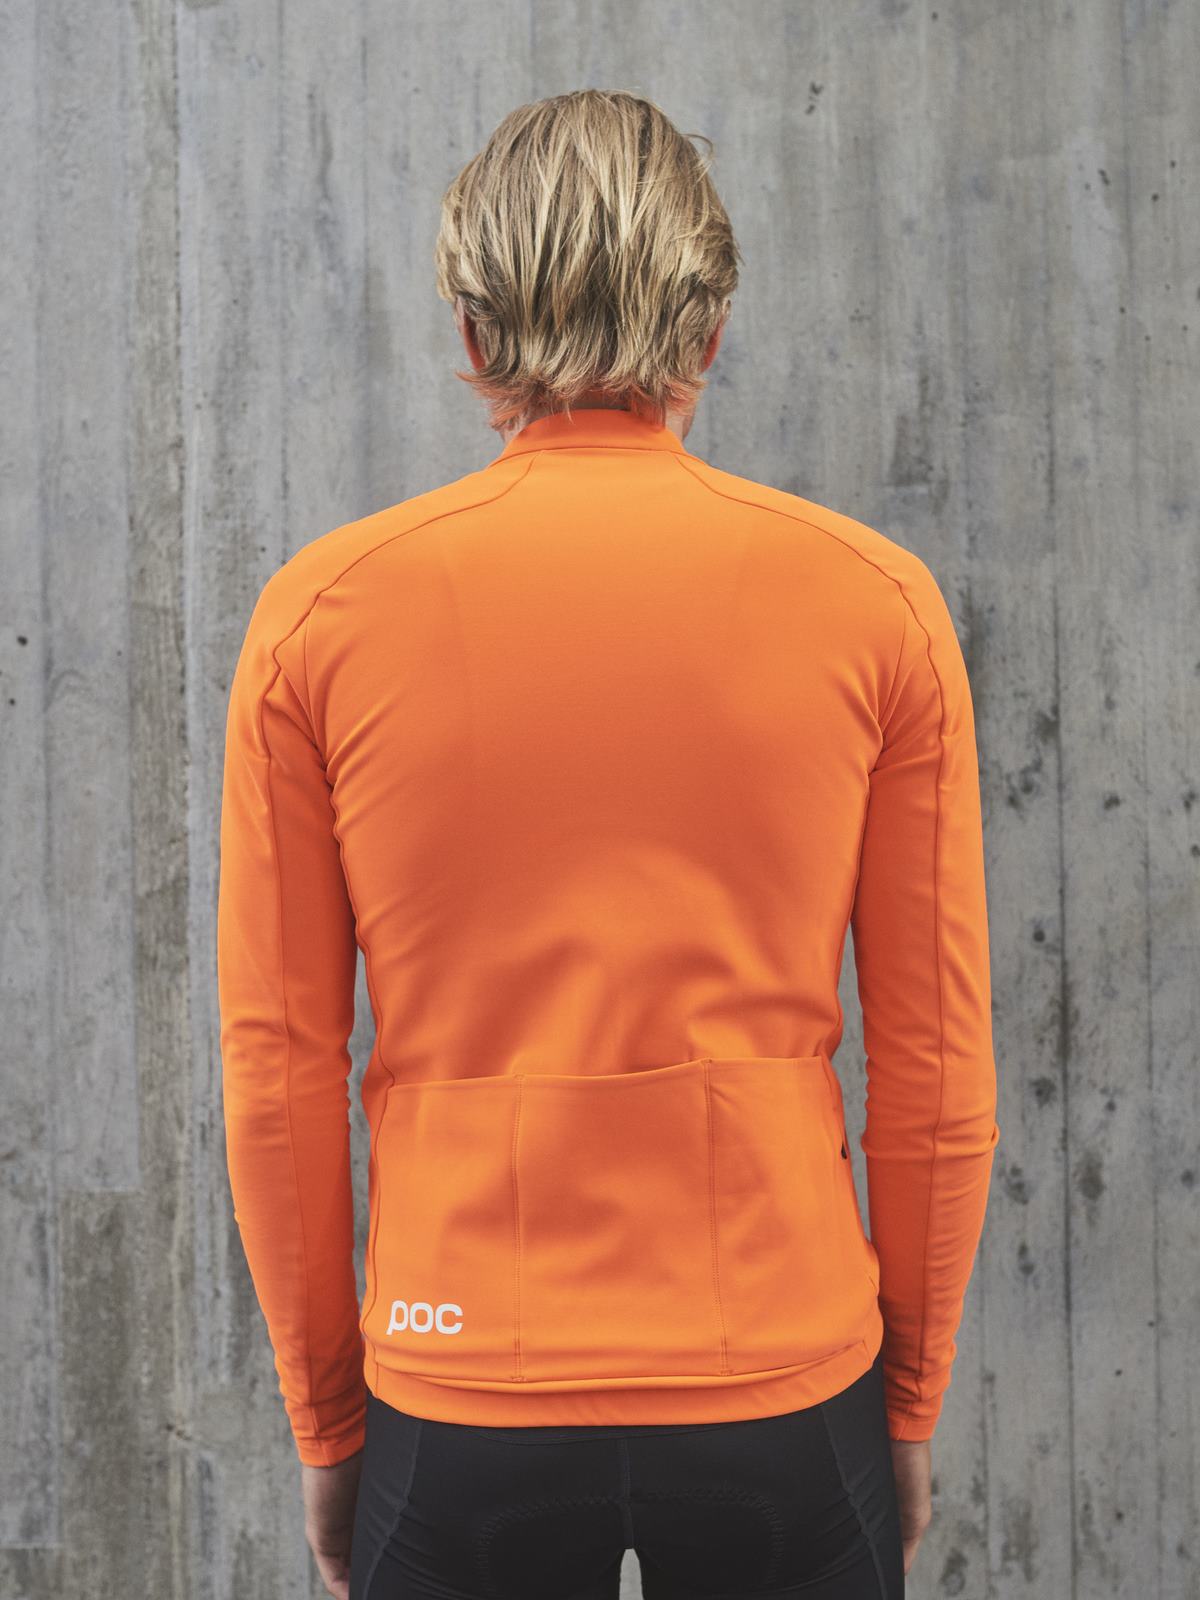 Koszulka POC Radiant Jersey - Zink Orange